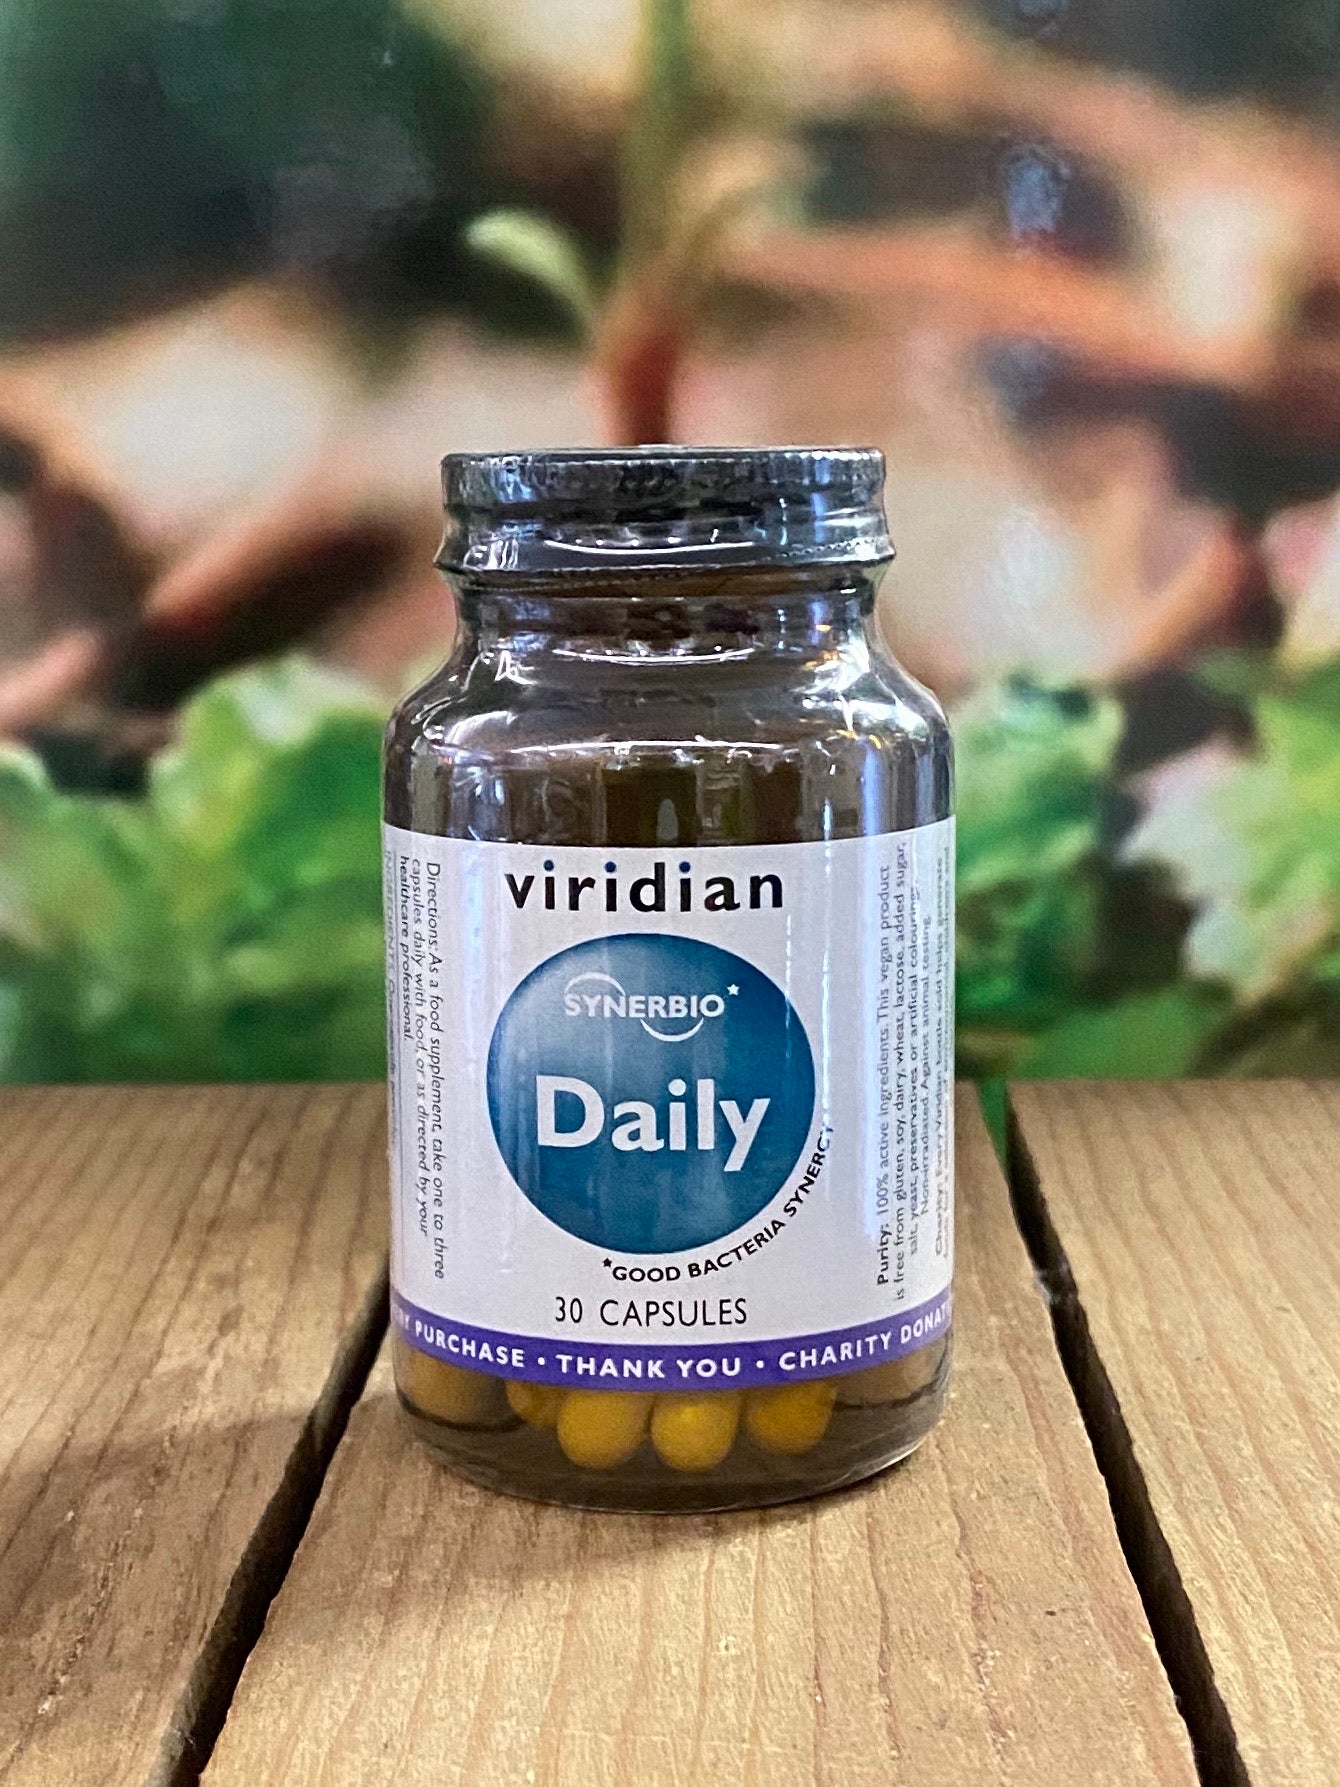 Viridian Daily 30 capsules